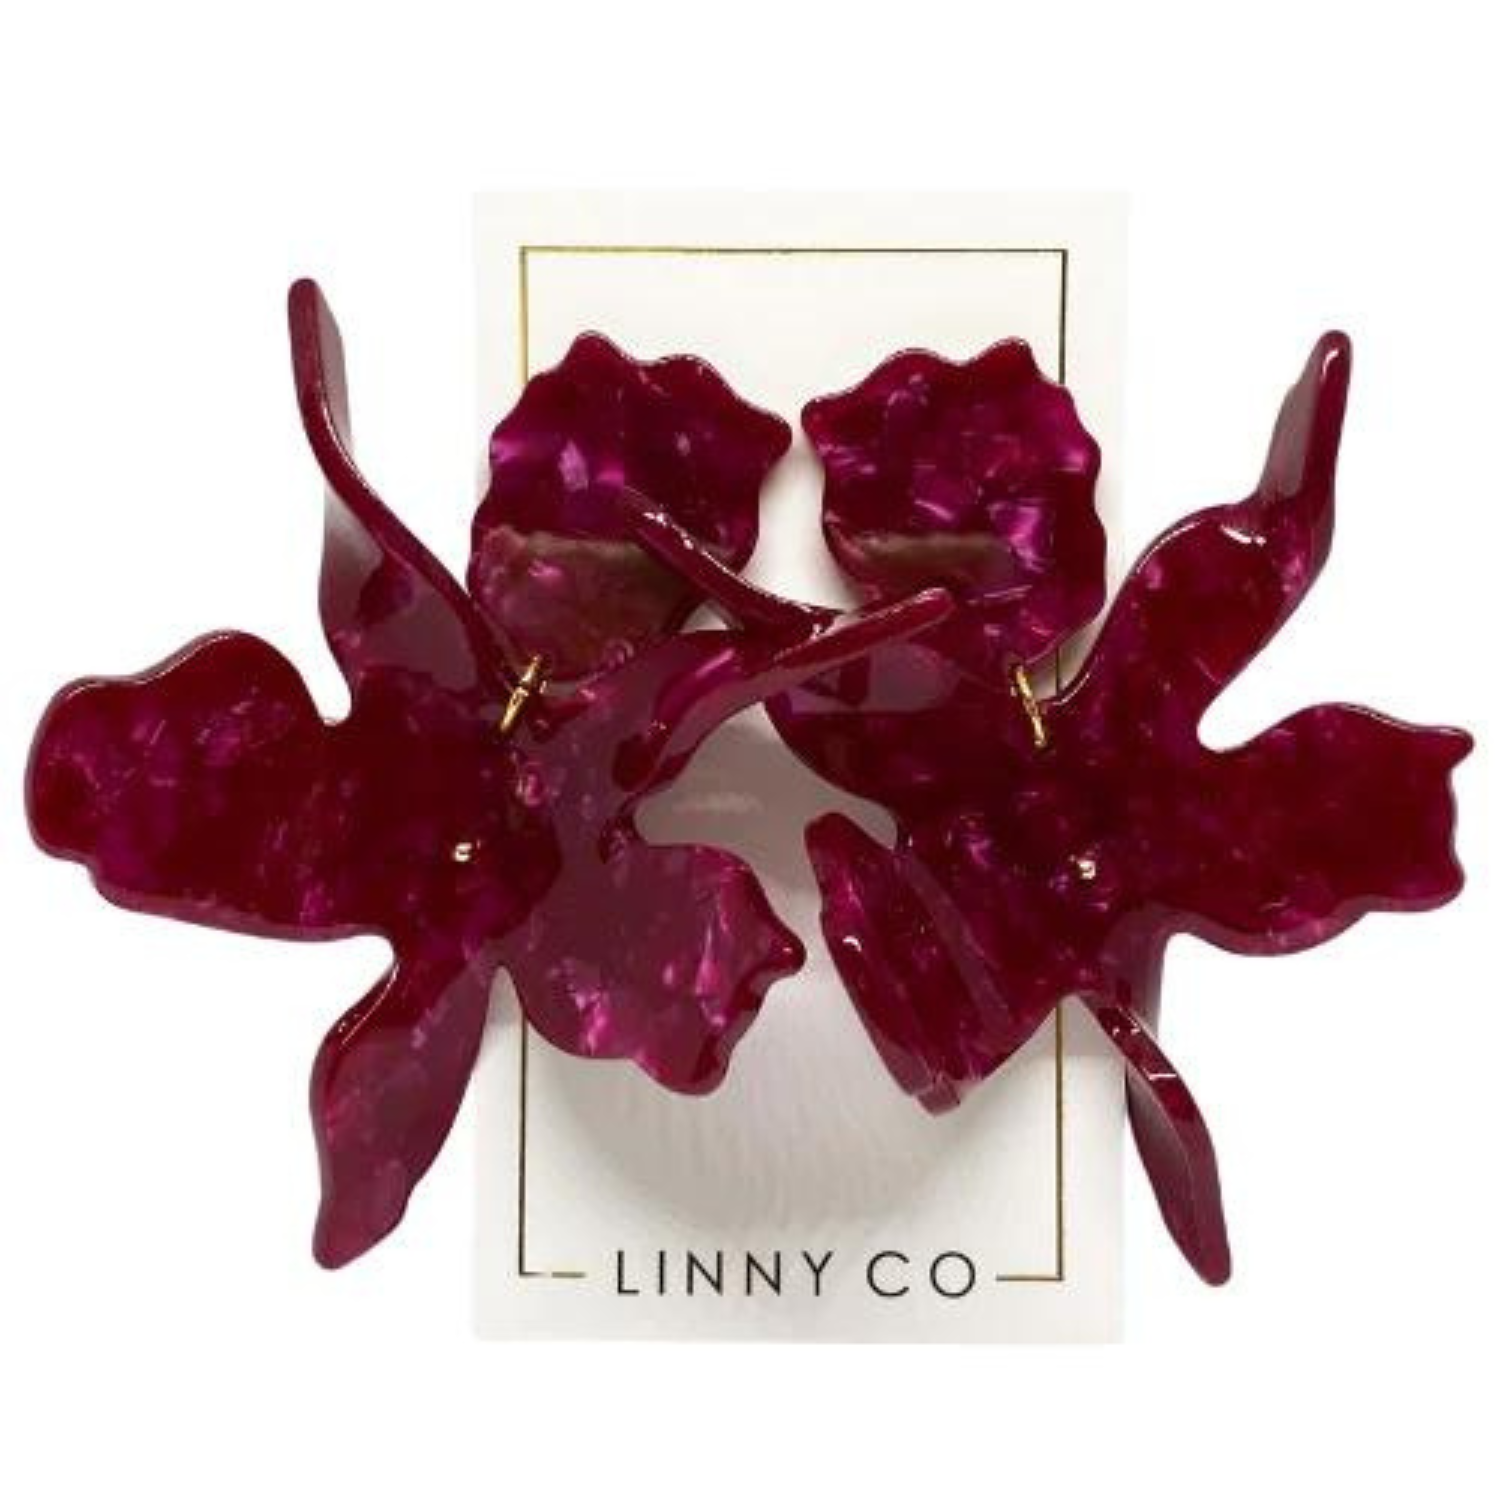 <img src="earring.jpg" alt="pinot noir flora floral linny co statement earring">